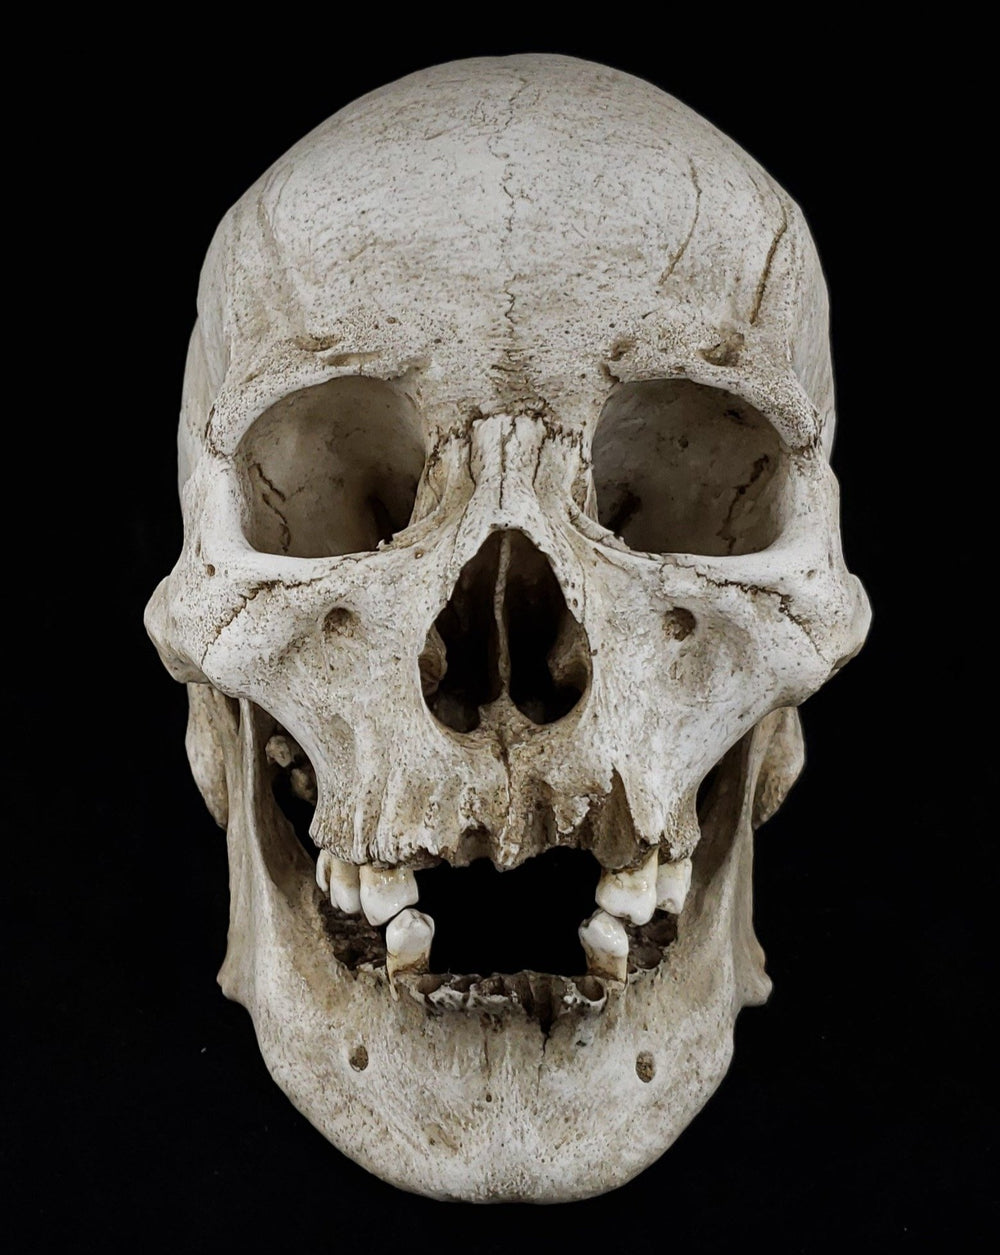 Human skull replica with natural bone color facing front.